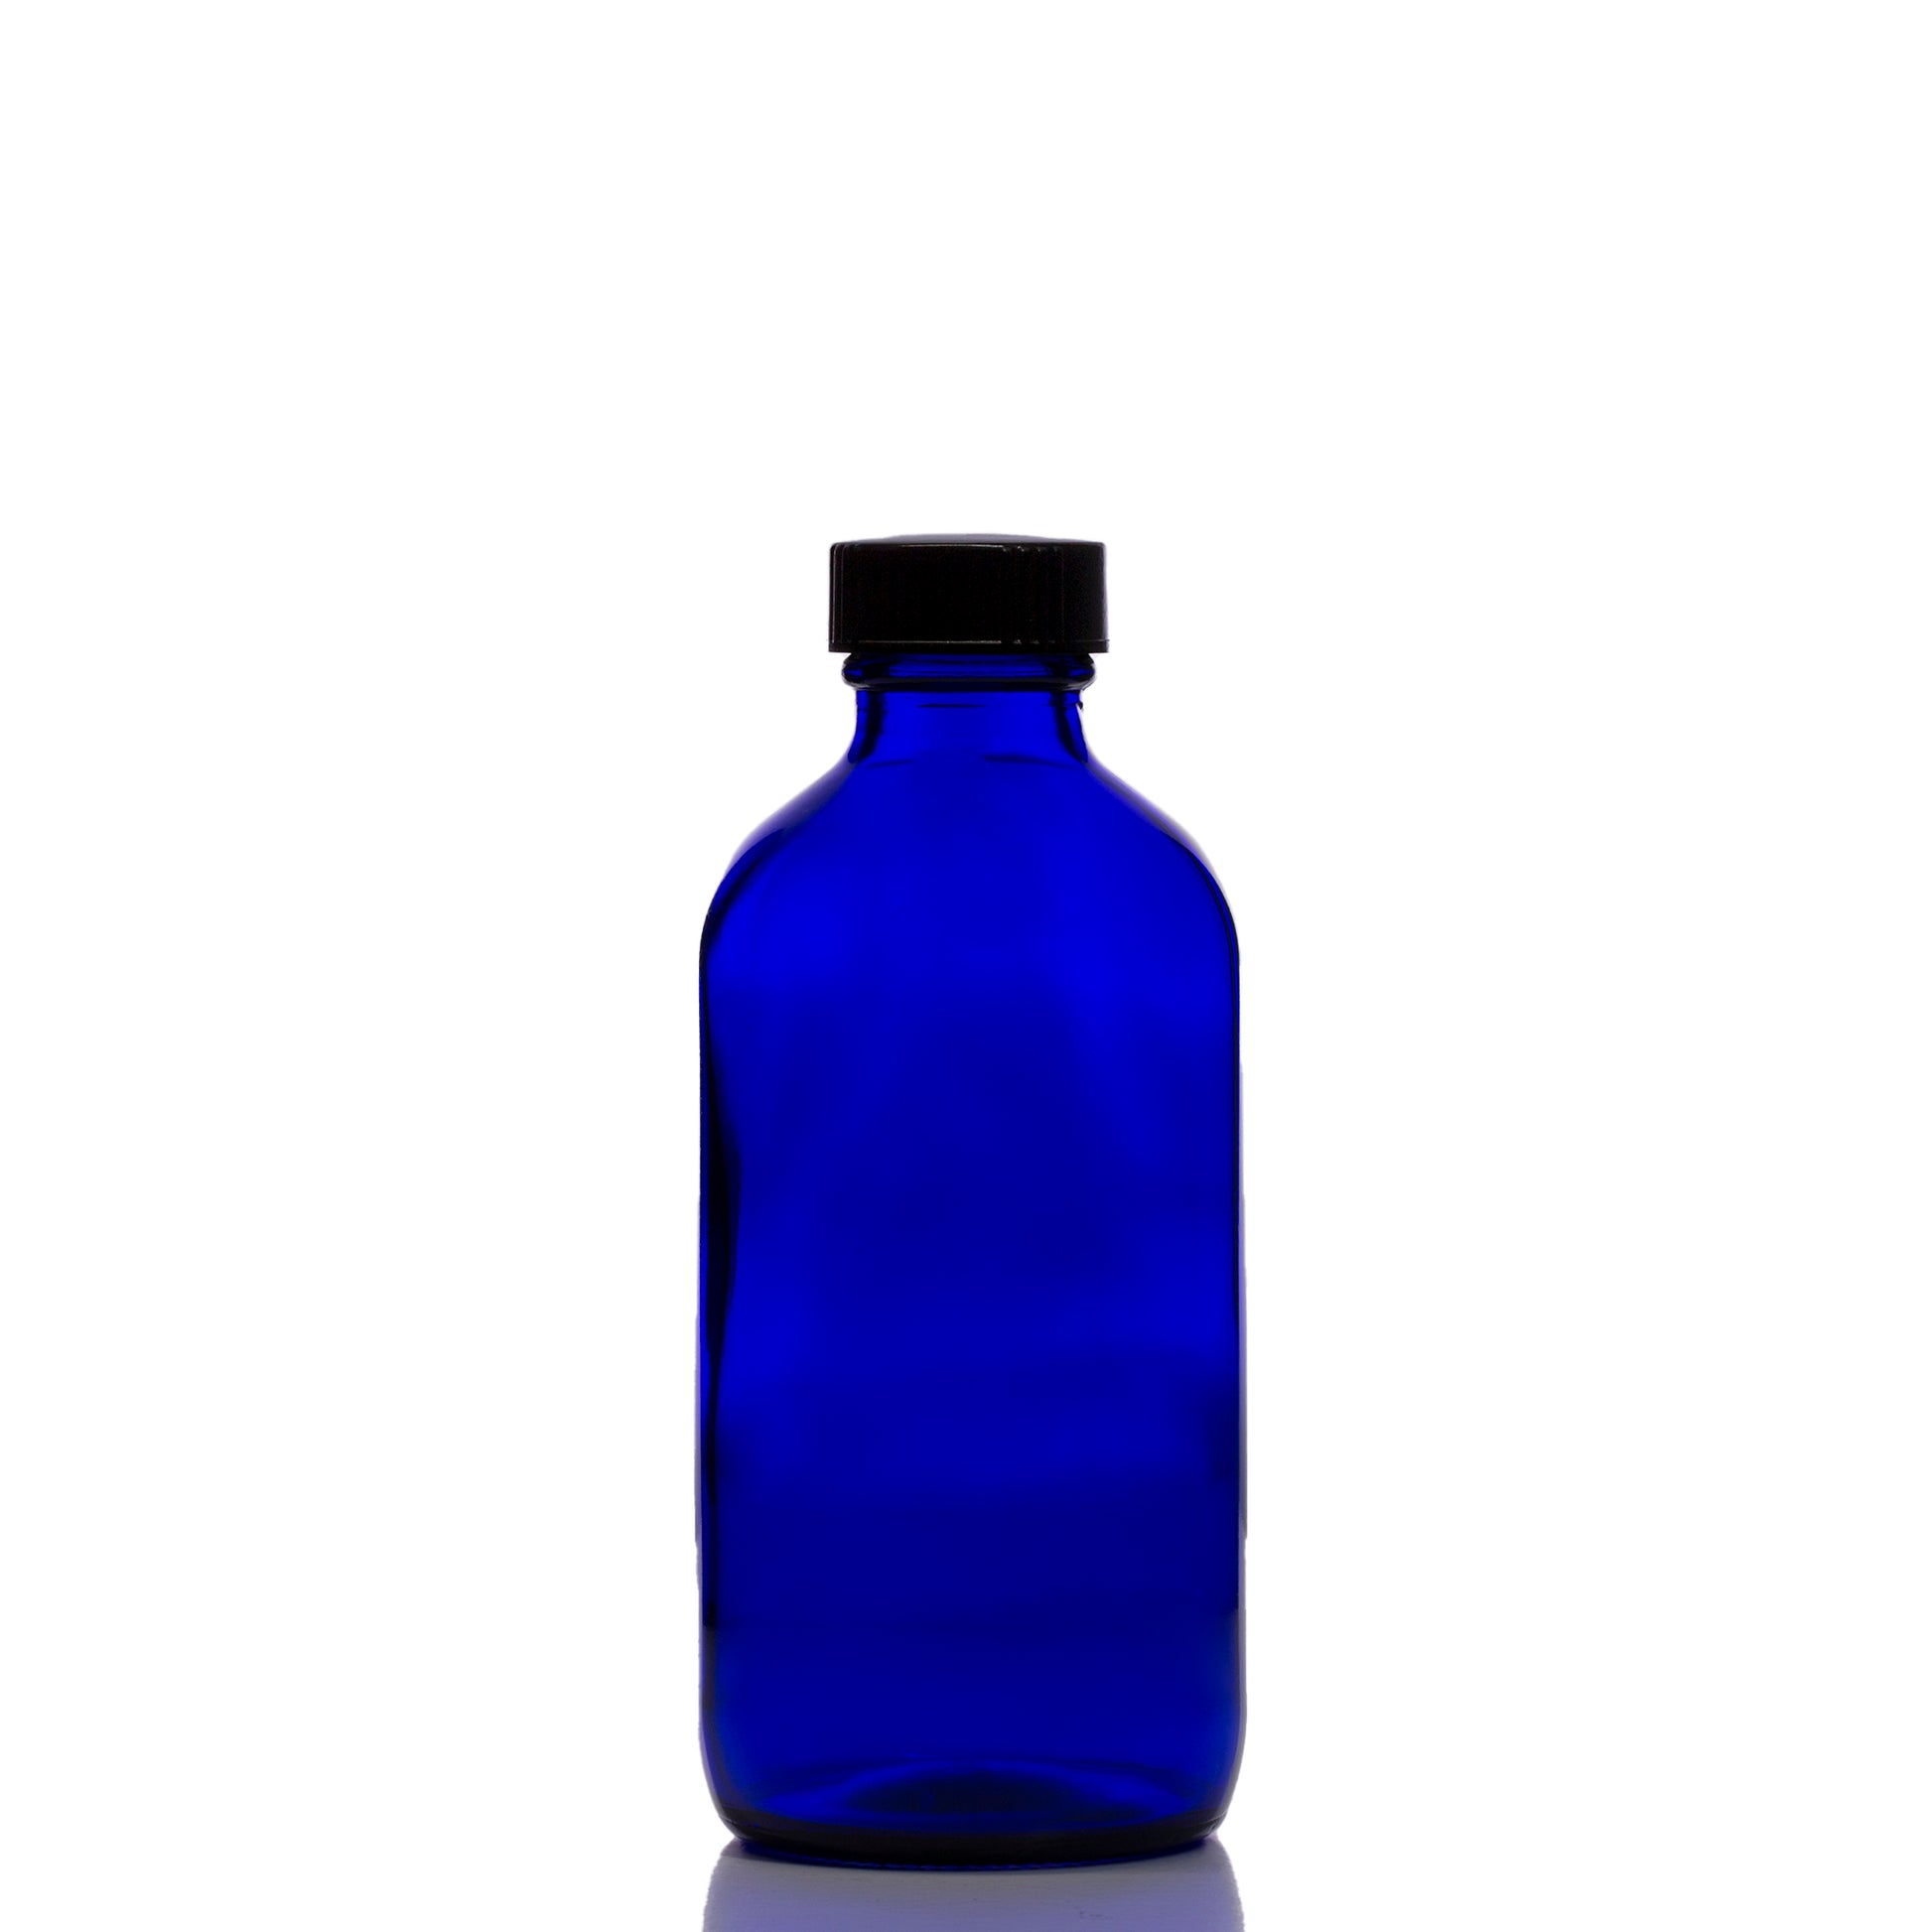 8oz Blue Glass Boston Round Bottle with Black Phenolic Cap